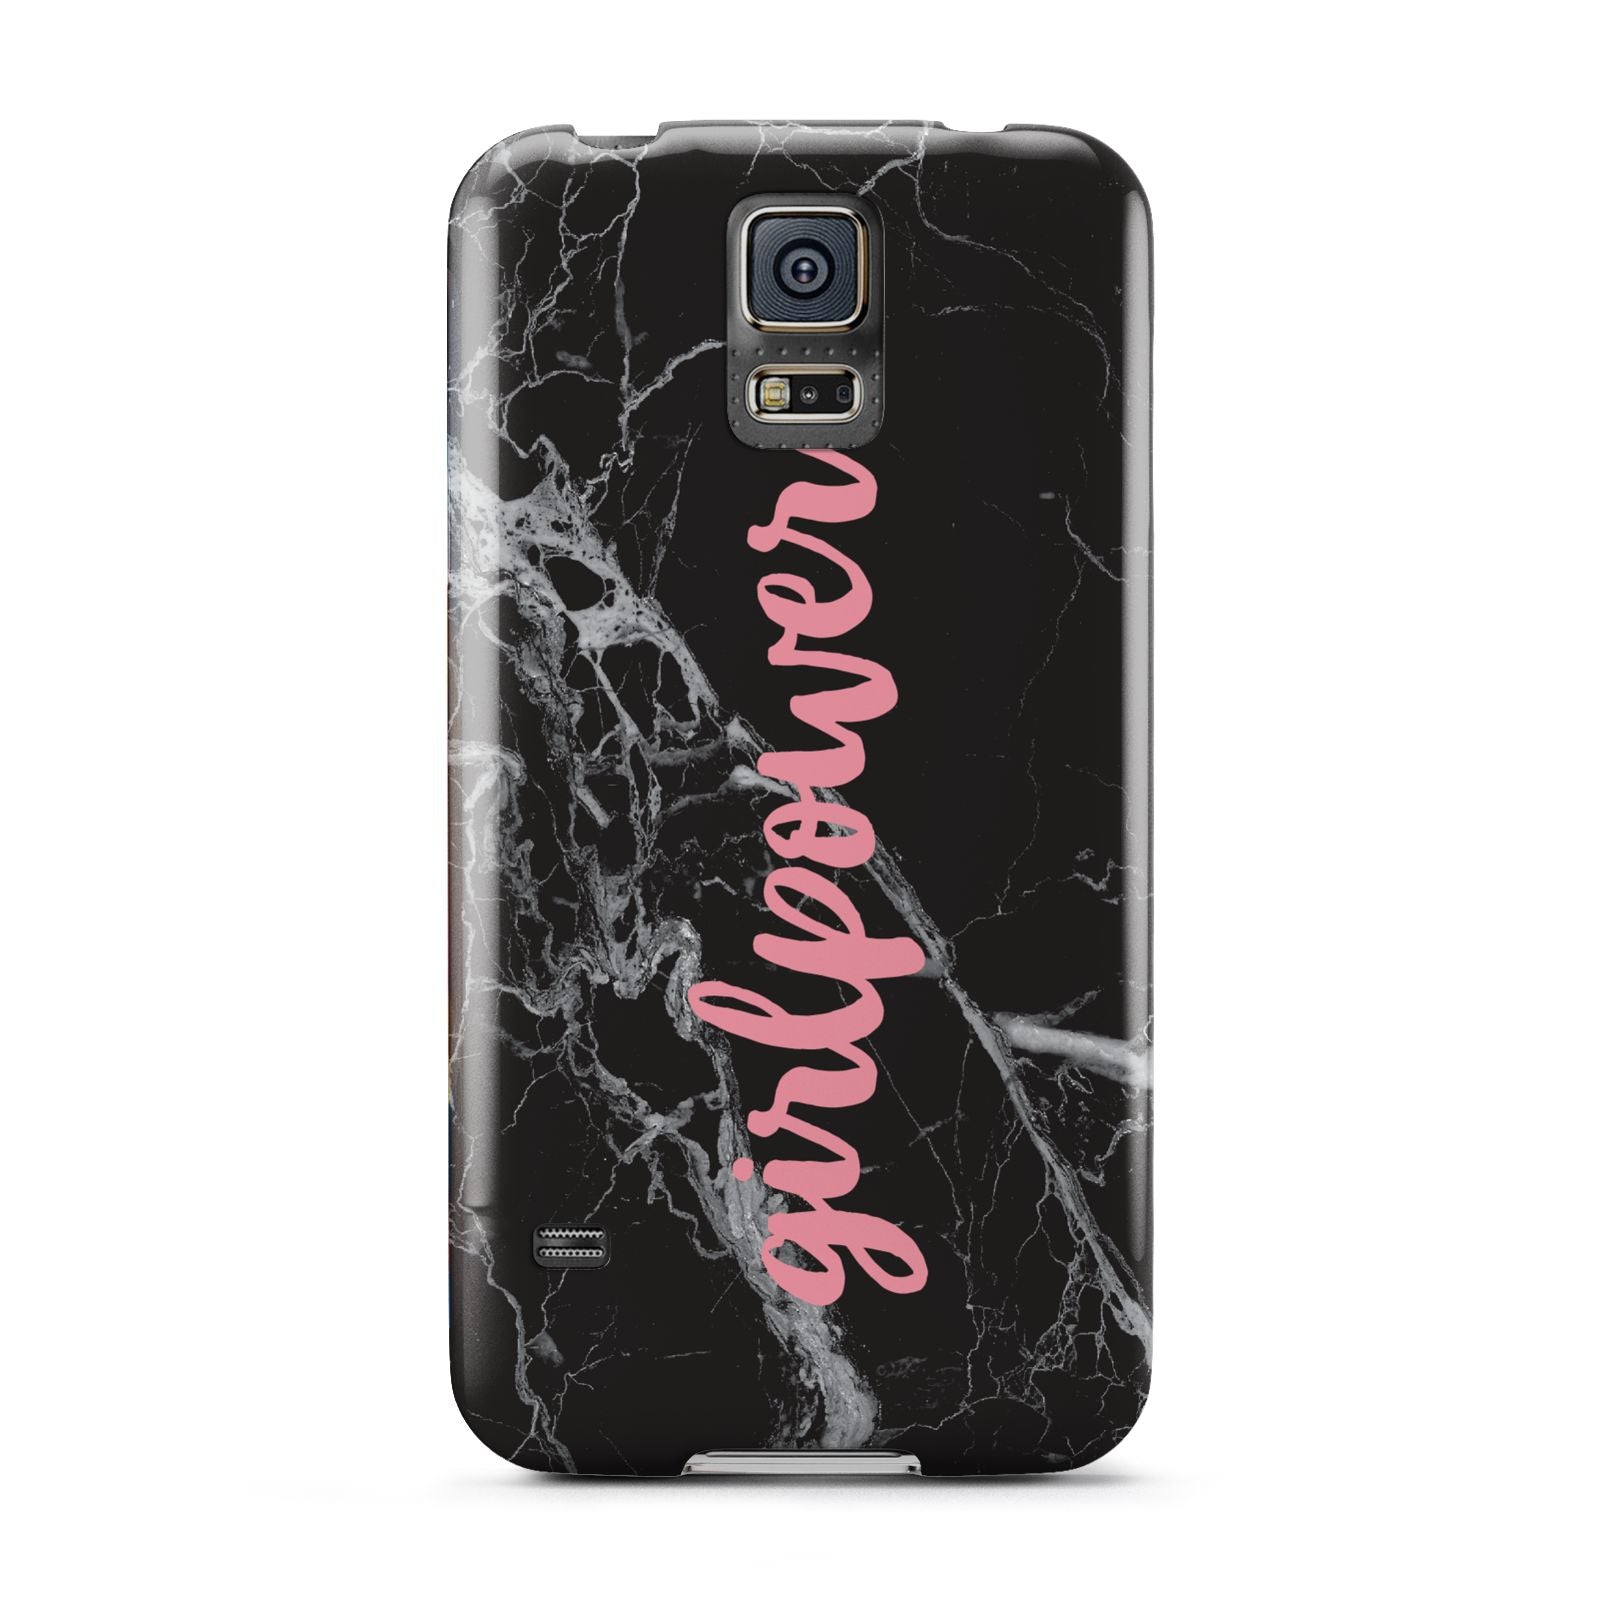 Girlpower Black White Marble Effect Samsung Galaxy S5 Case